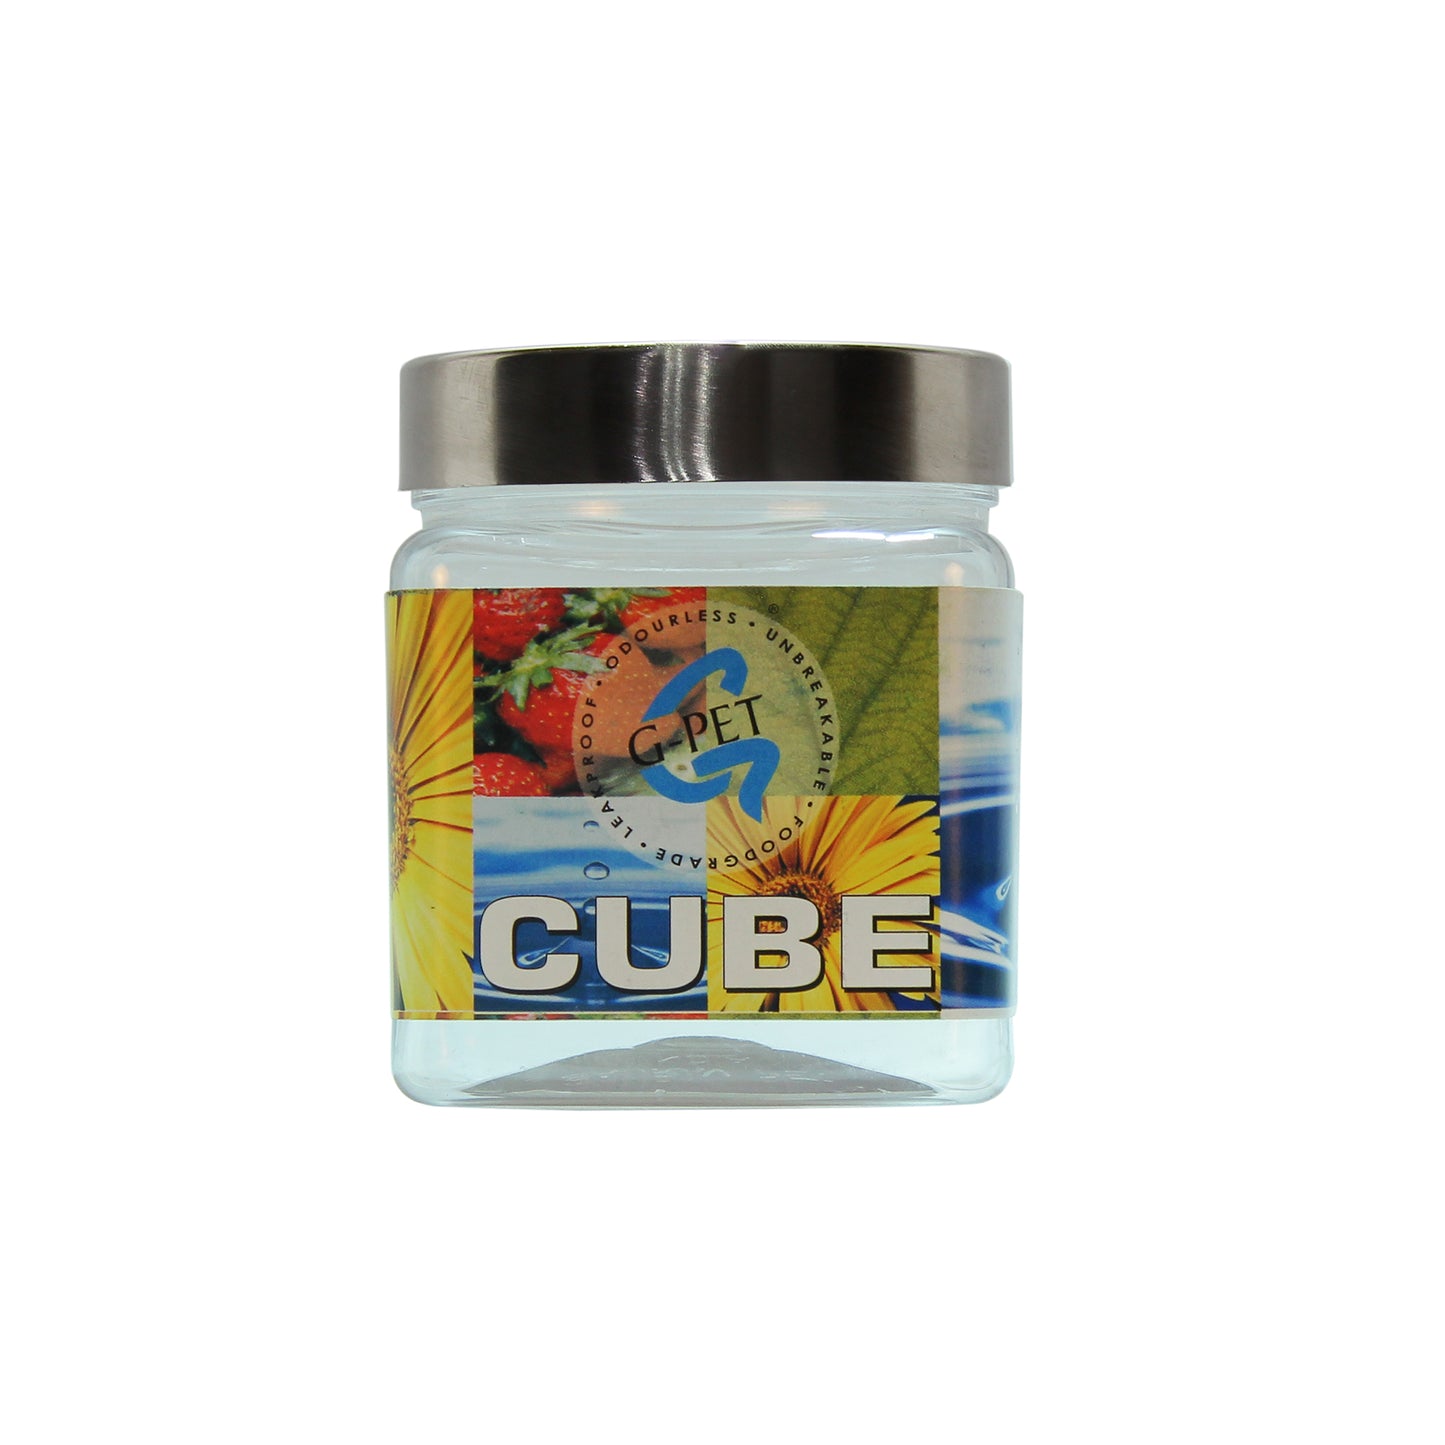 Cube PET Jar / Container PET Plastic Airtight Container with Steel Cap (3, 350ML)